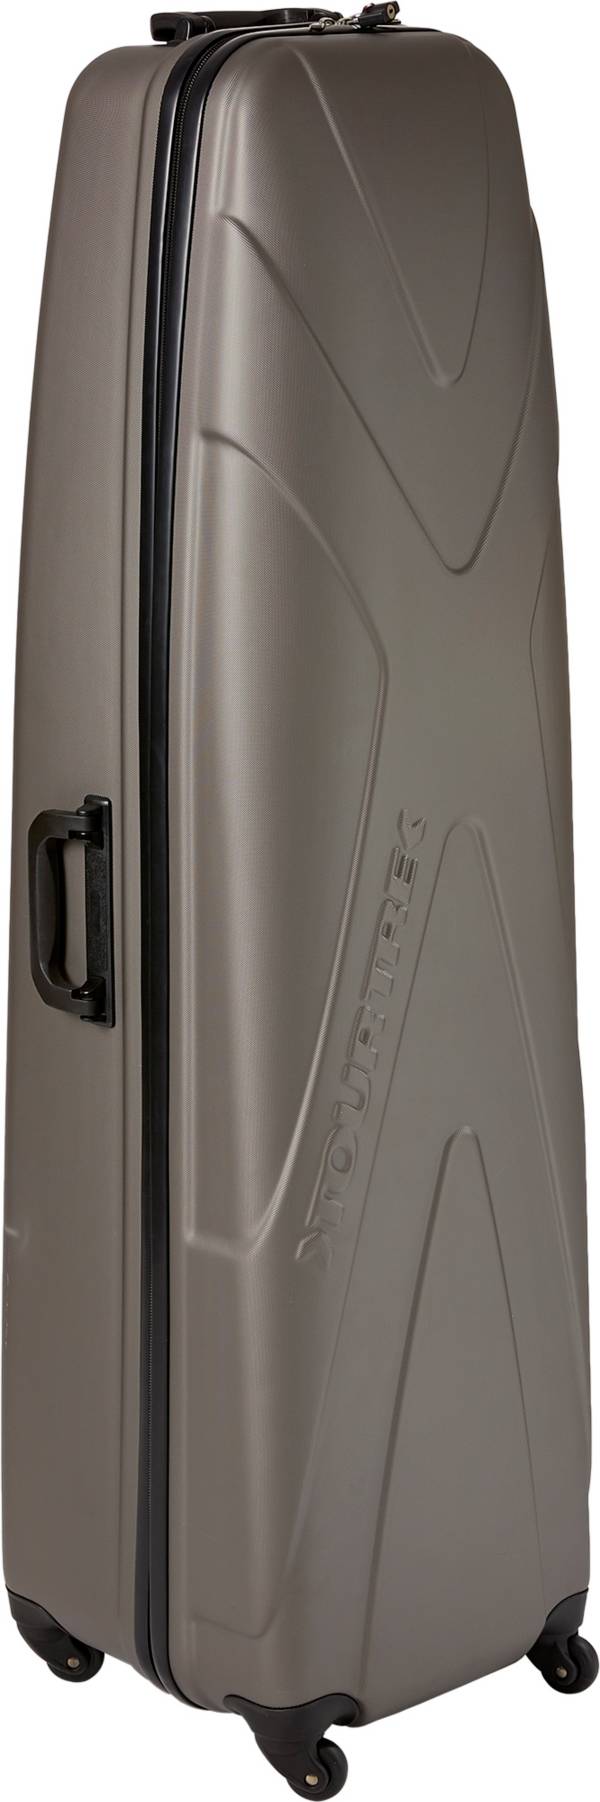 TourTrek Premium Hardcase Travel Cover product image